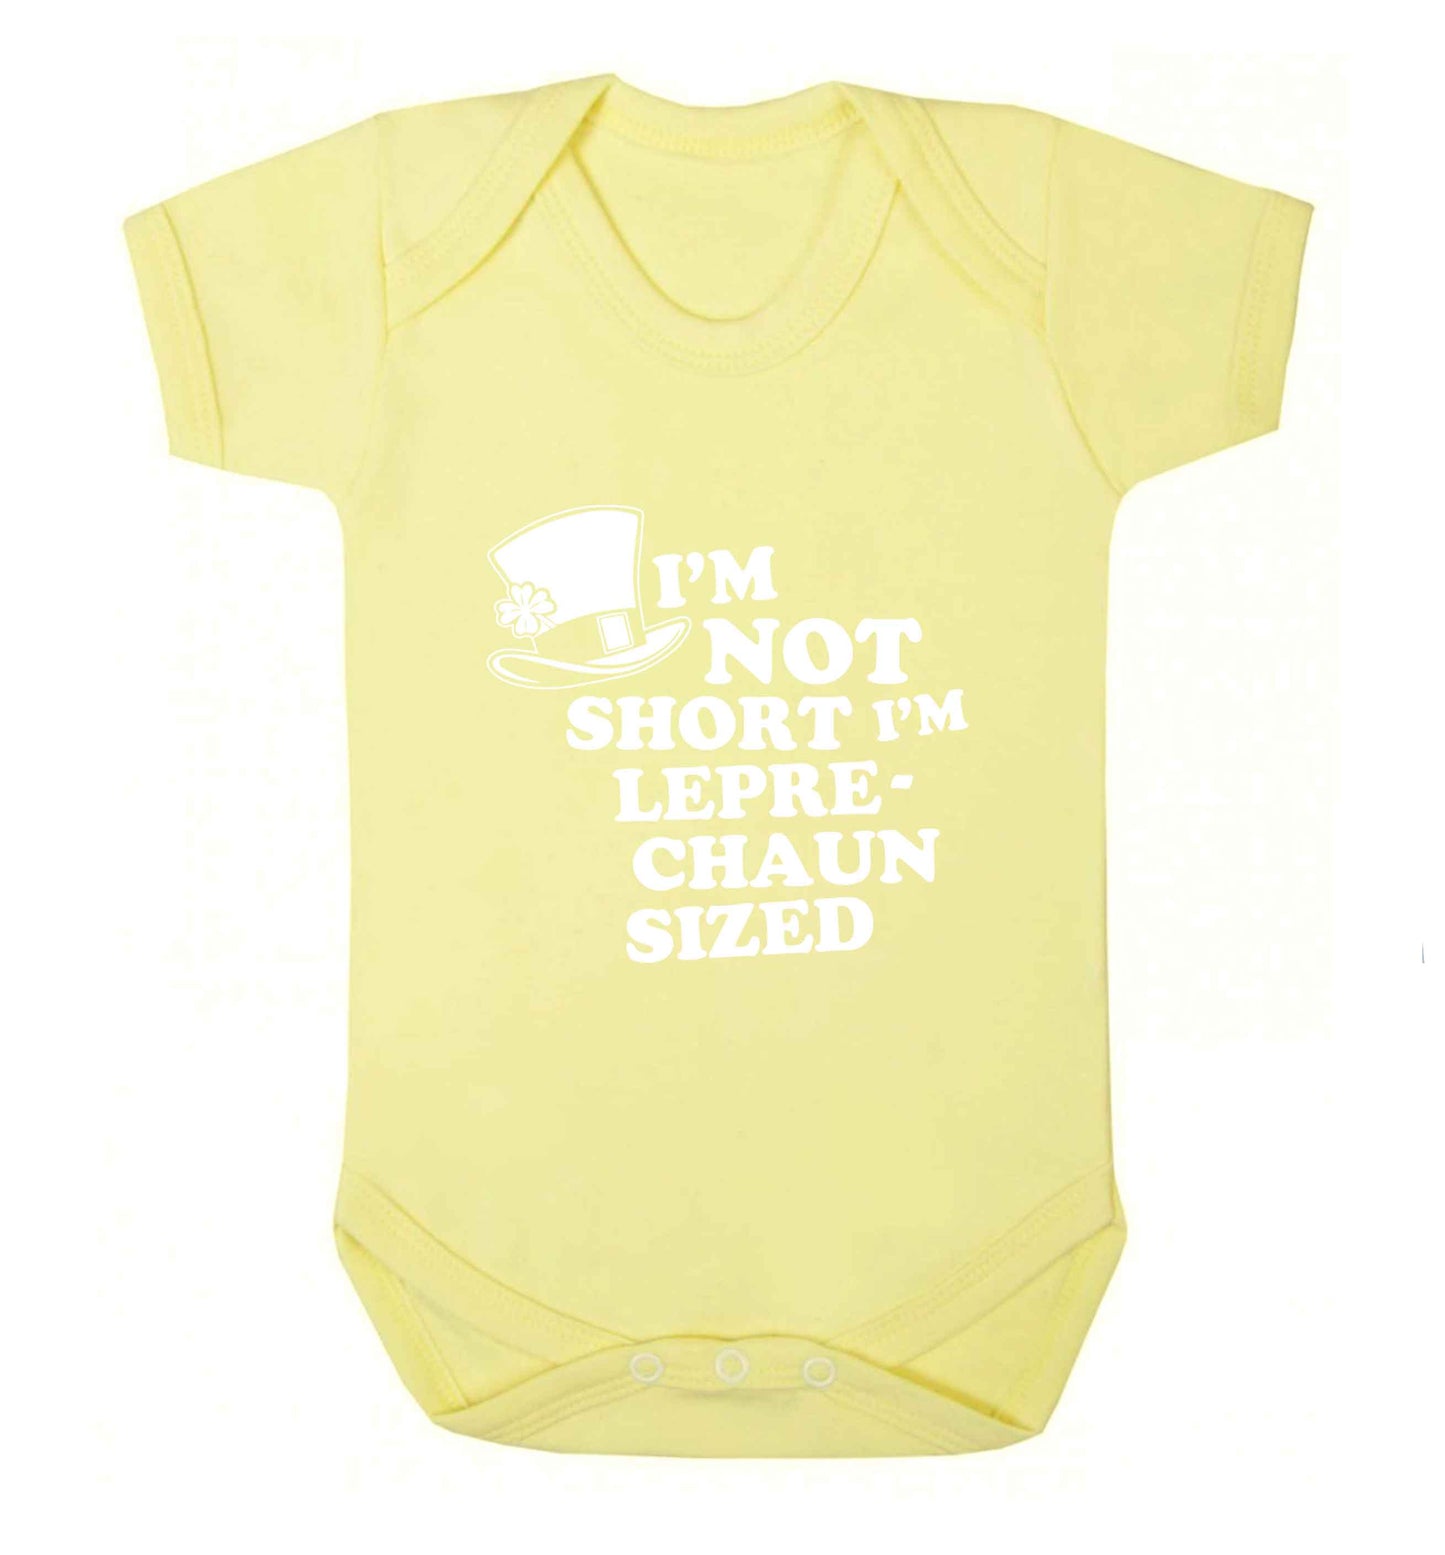 I'm not short I'm leprechaun sized baby vest pale yellow 18-24 months